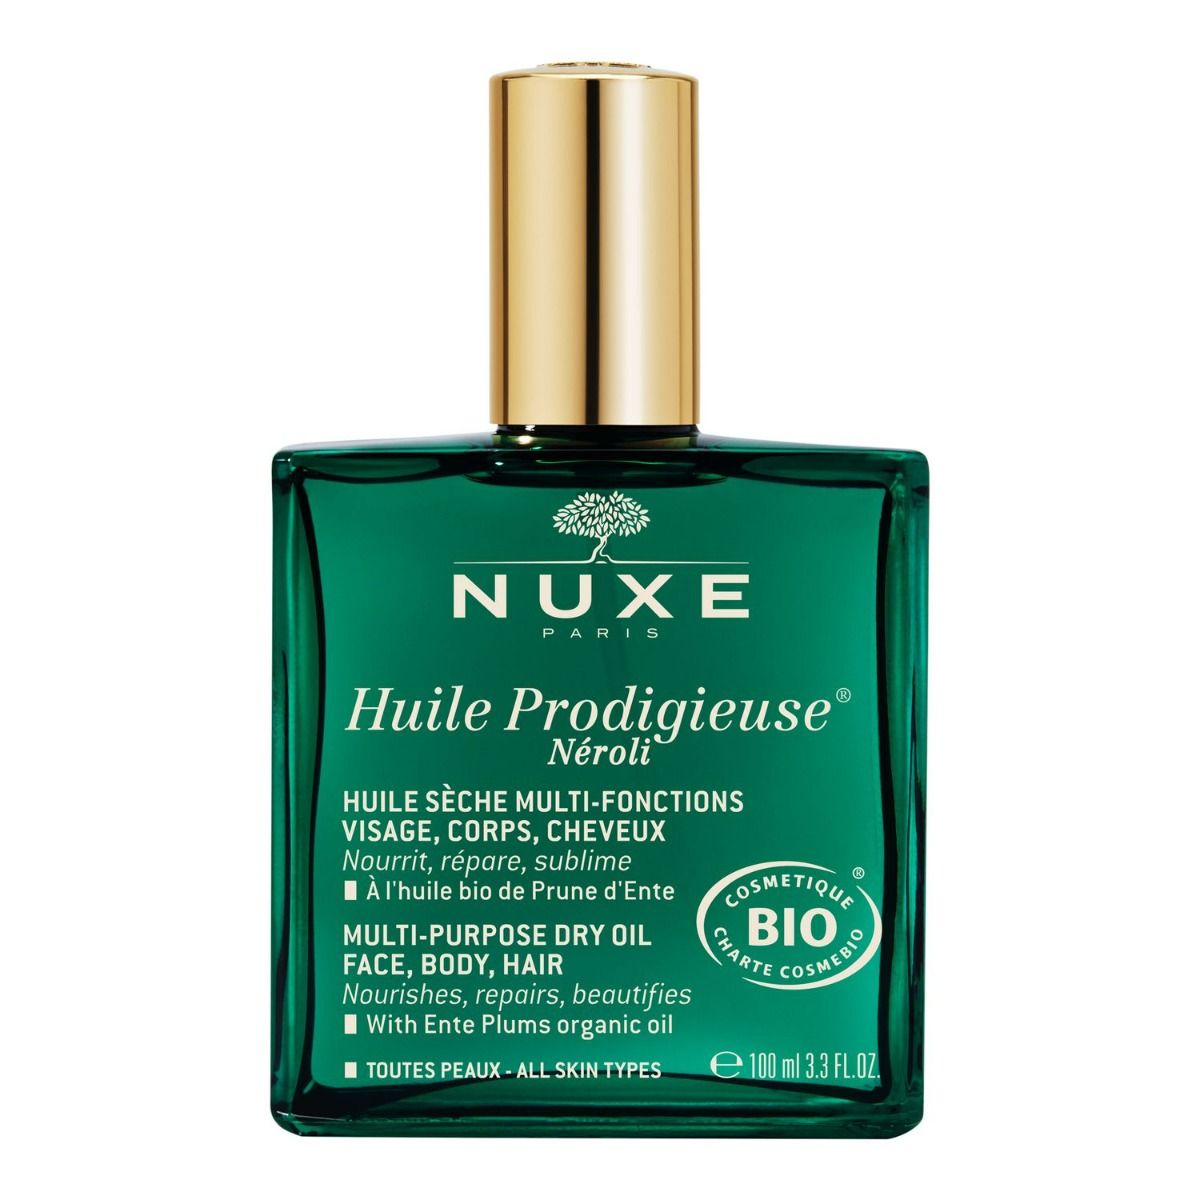 Nuxe Huile Prodigieuse Neroli масло для лица, тела и волос, 100 ml nuxe мерцающее сухое масло для лица тела и волос huile or 100 мл nuxe prodigieuse